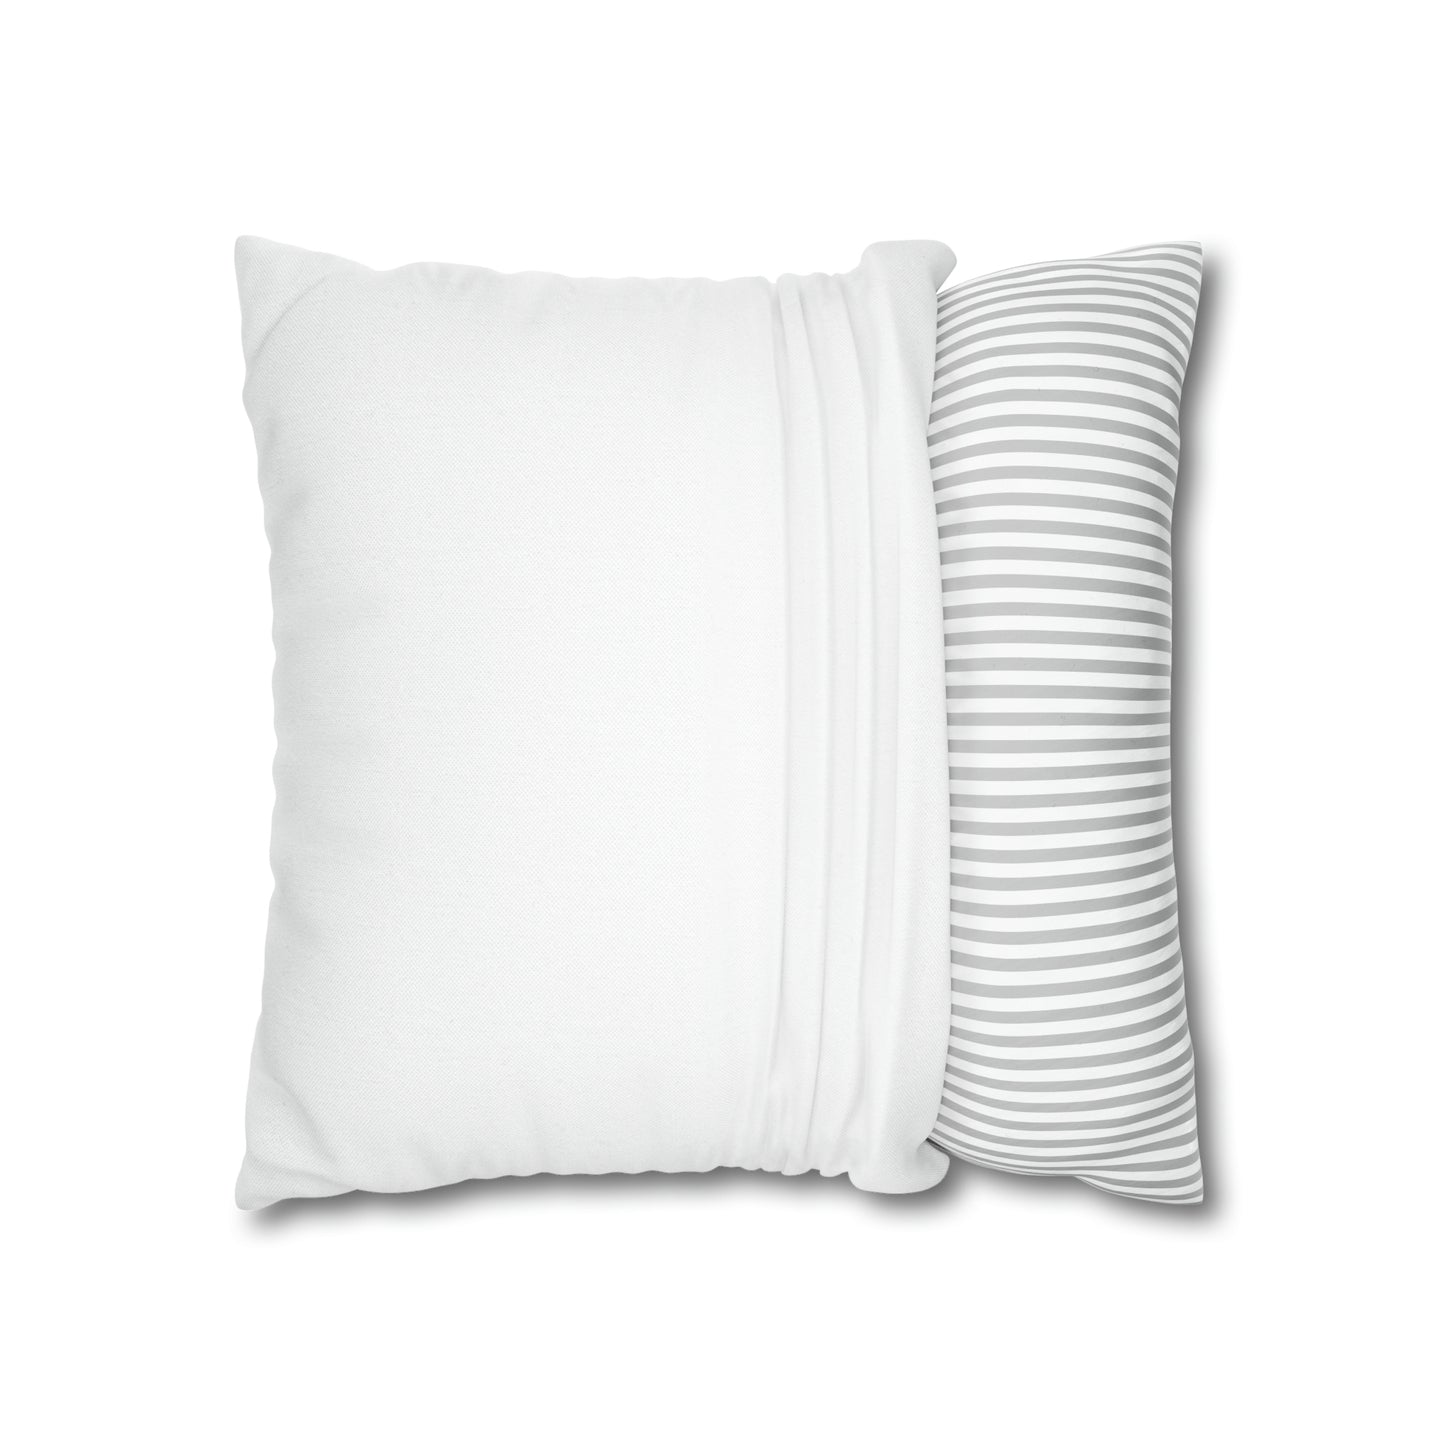 Catmas Spun Polyester Square Pillow Case